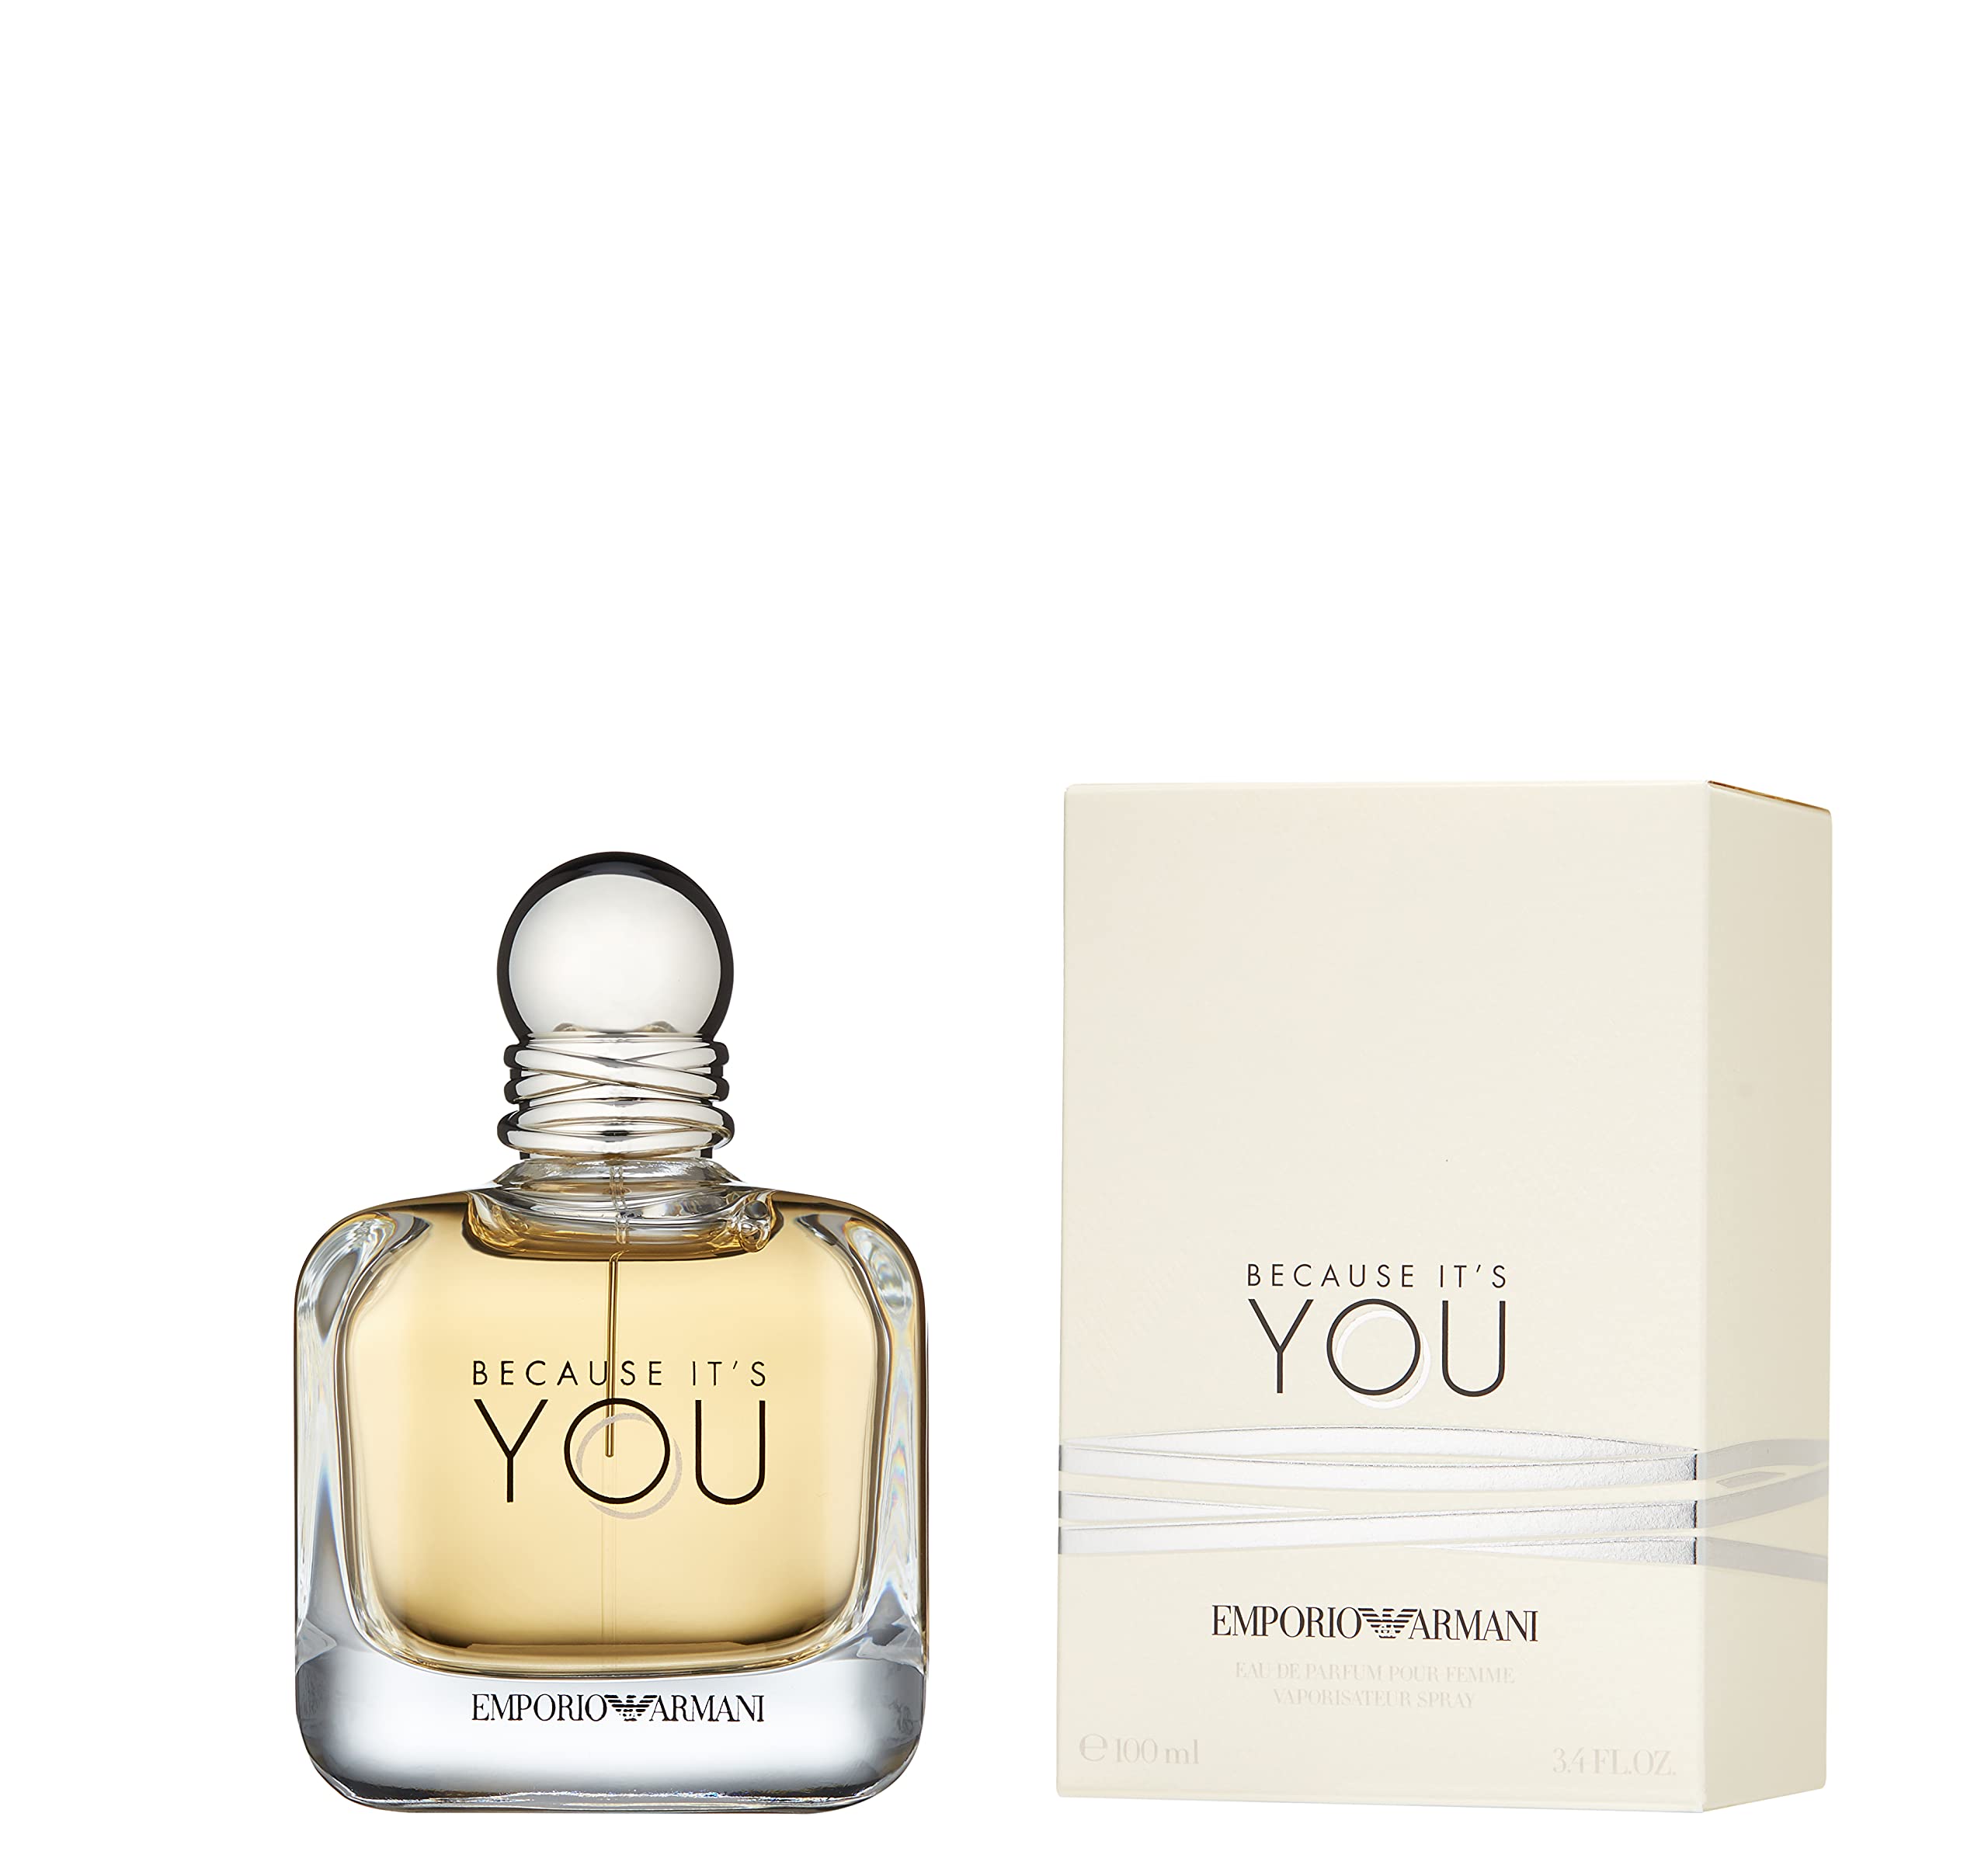 Emporio Armani Because It's You Eau De Parfum 3.4 Ounce / 100 ml